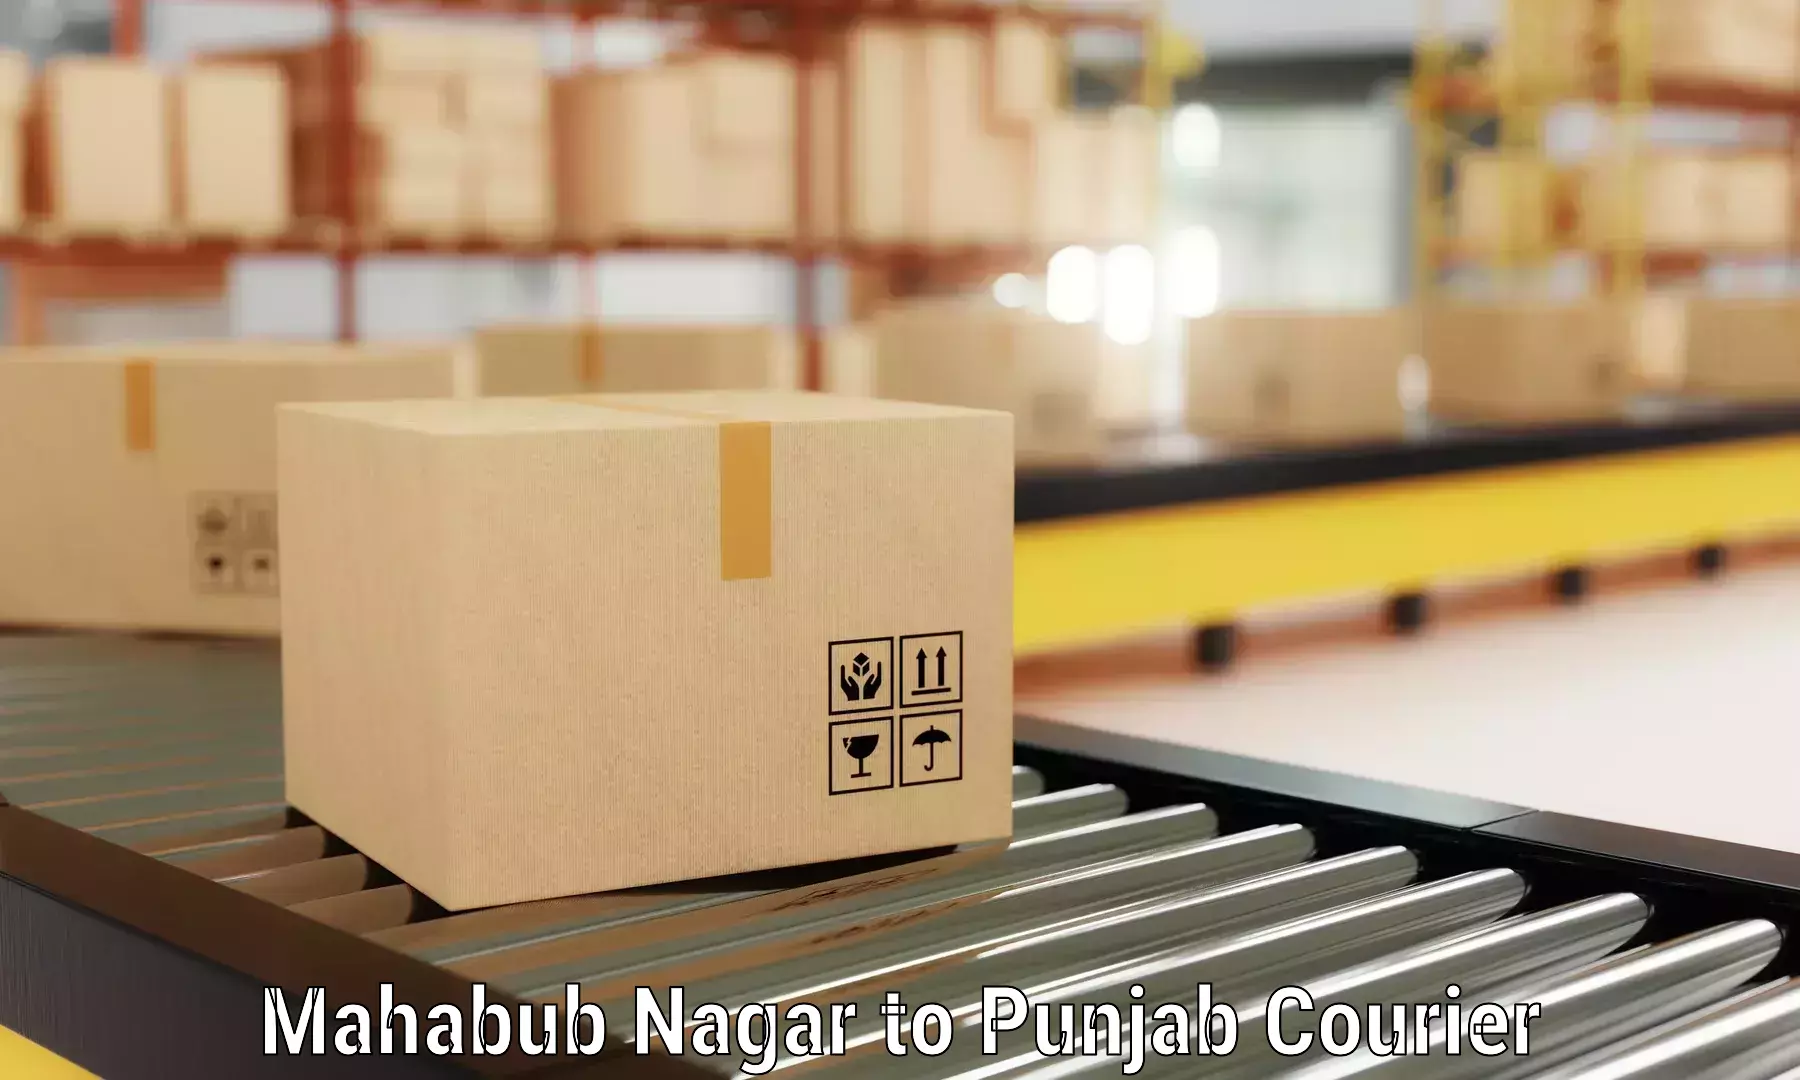 Furniture delivery service Mahabub Nagar to Malout